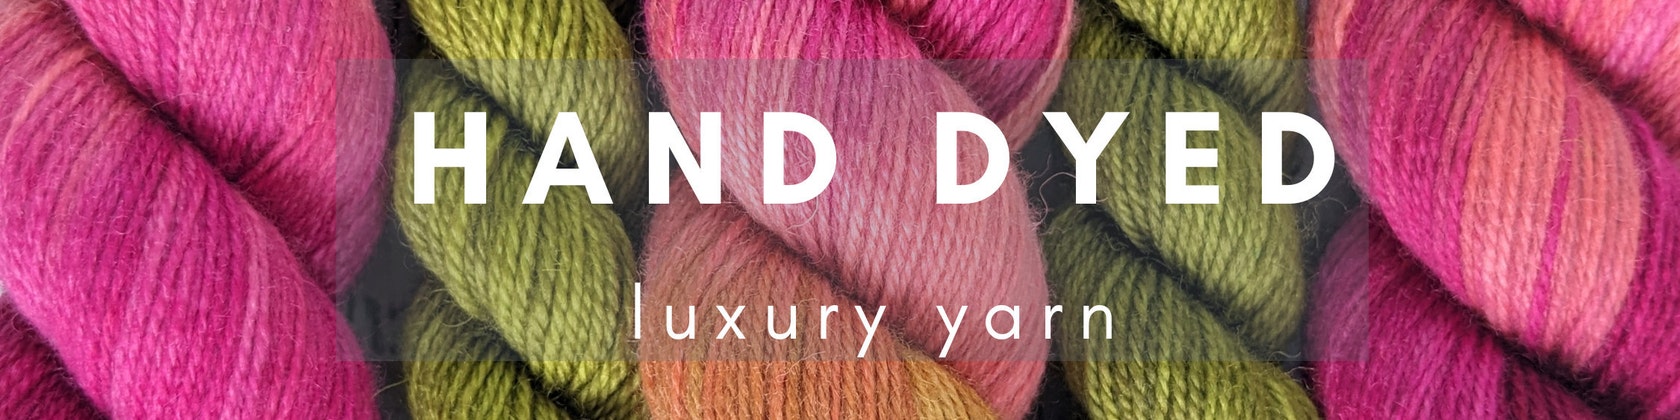 Blooming Lavender Socks Mini Skein Yarn Kit – Yarn Love